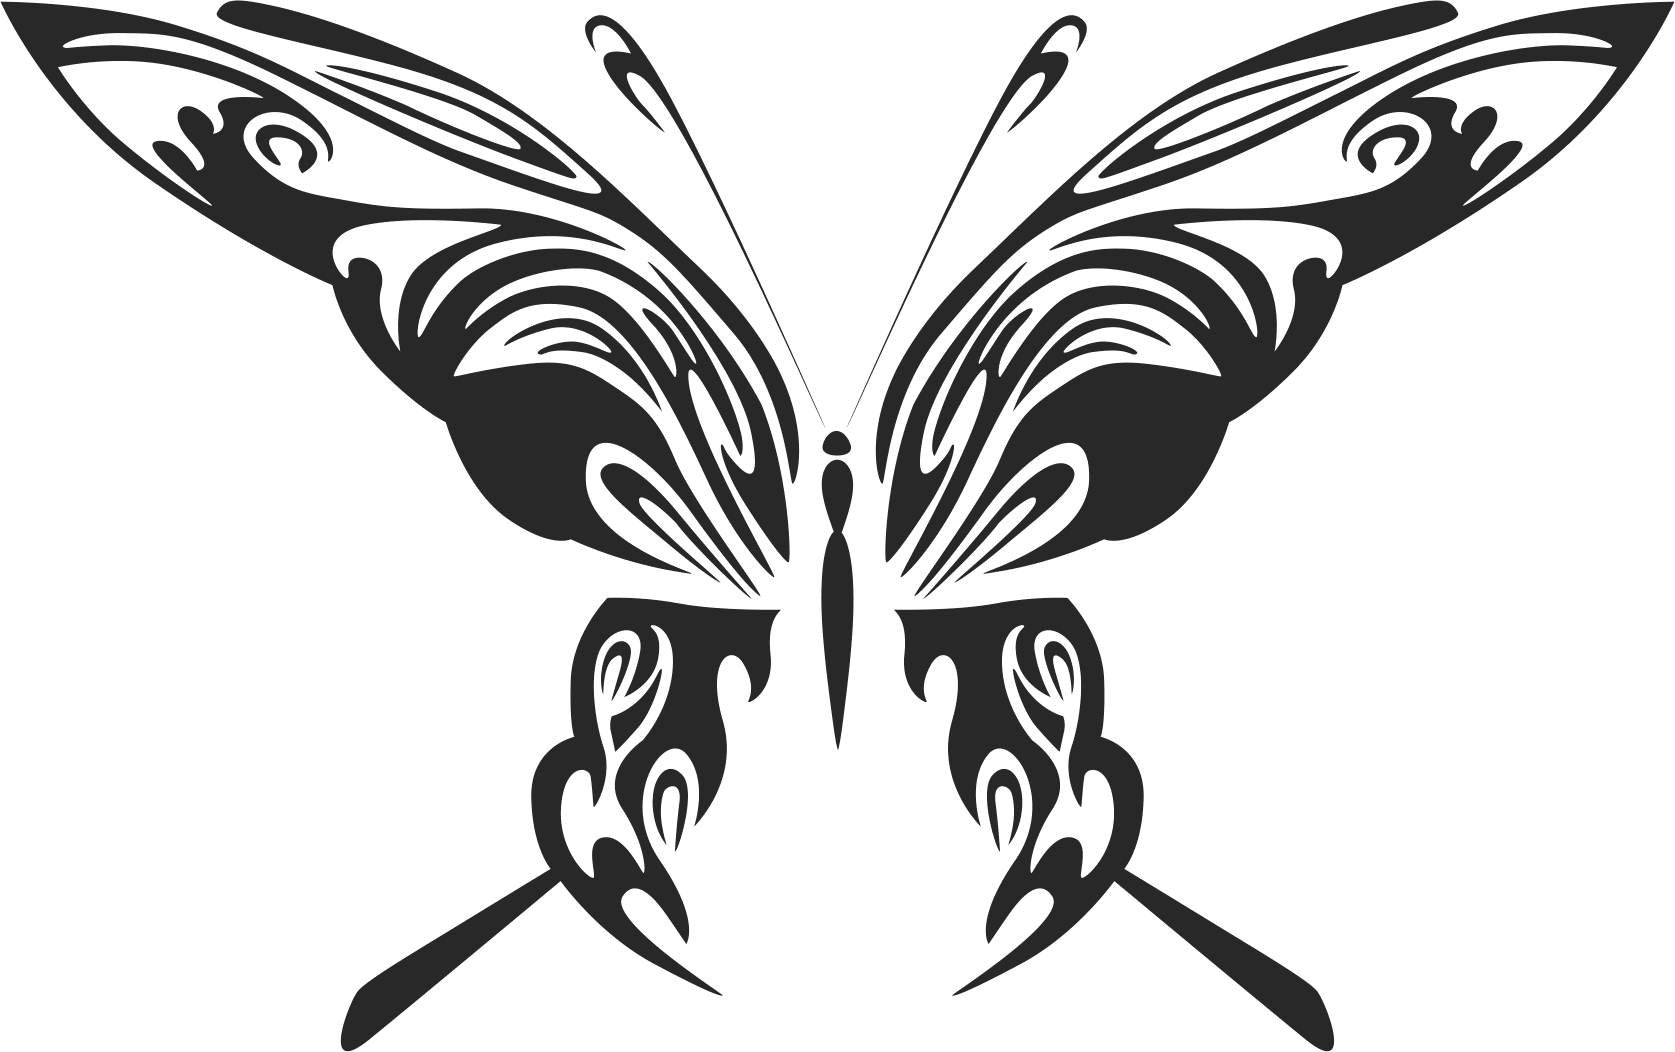 Butterfly Vector Art 048 Free Vector